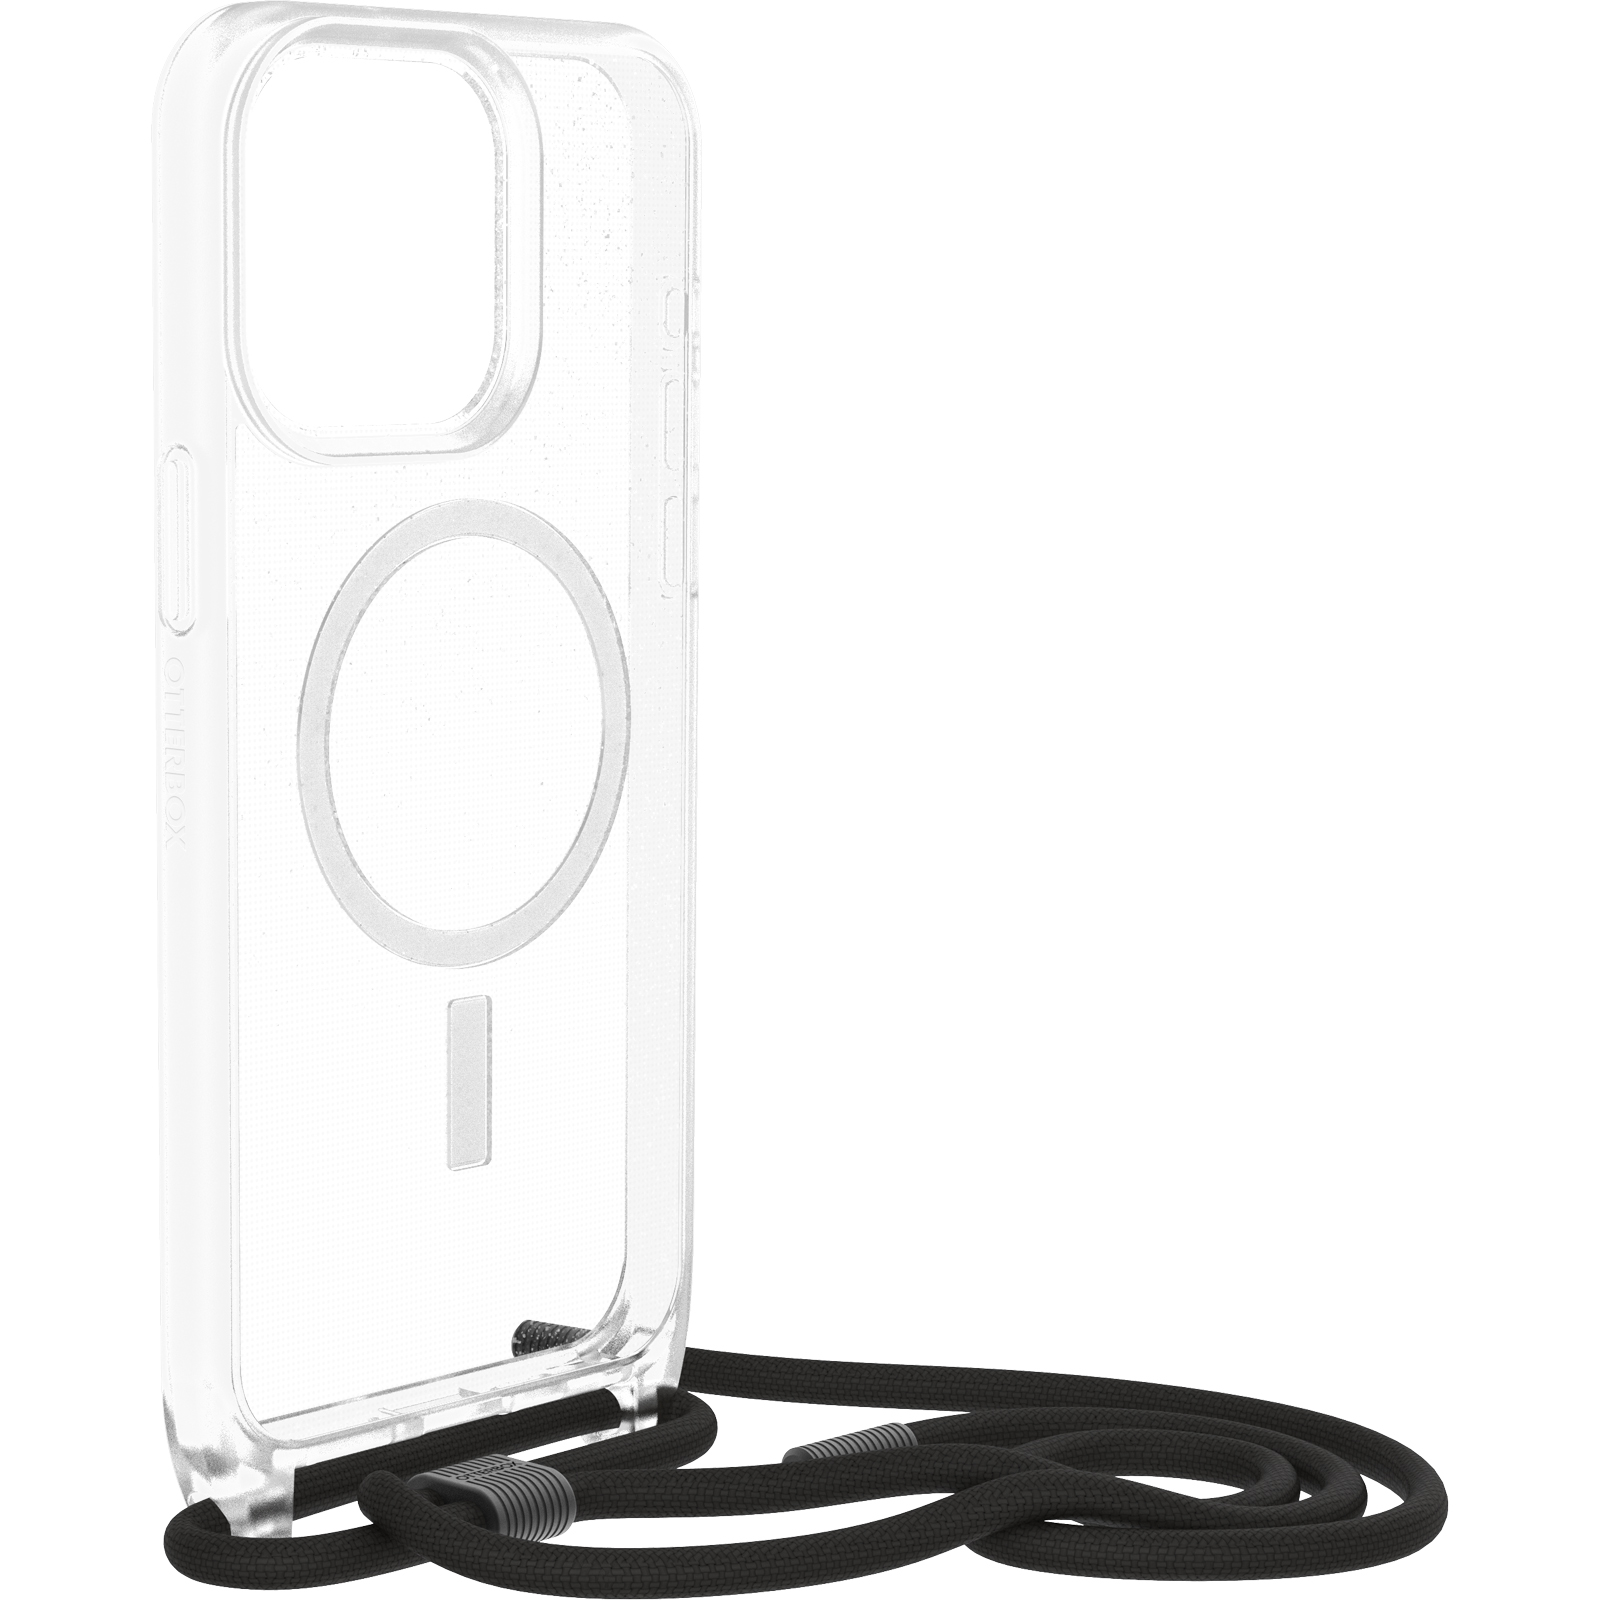 OtterBox รุ่น React Necklace MagSafe - เคส iPhone 15 Pro Max - สี Stardust